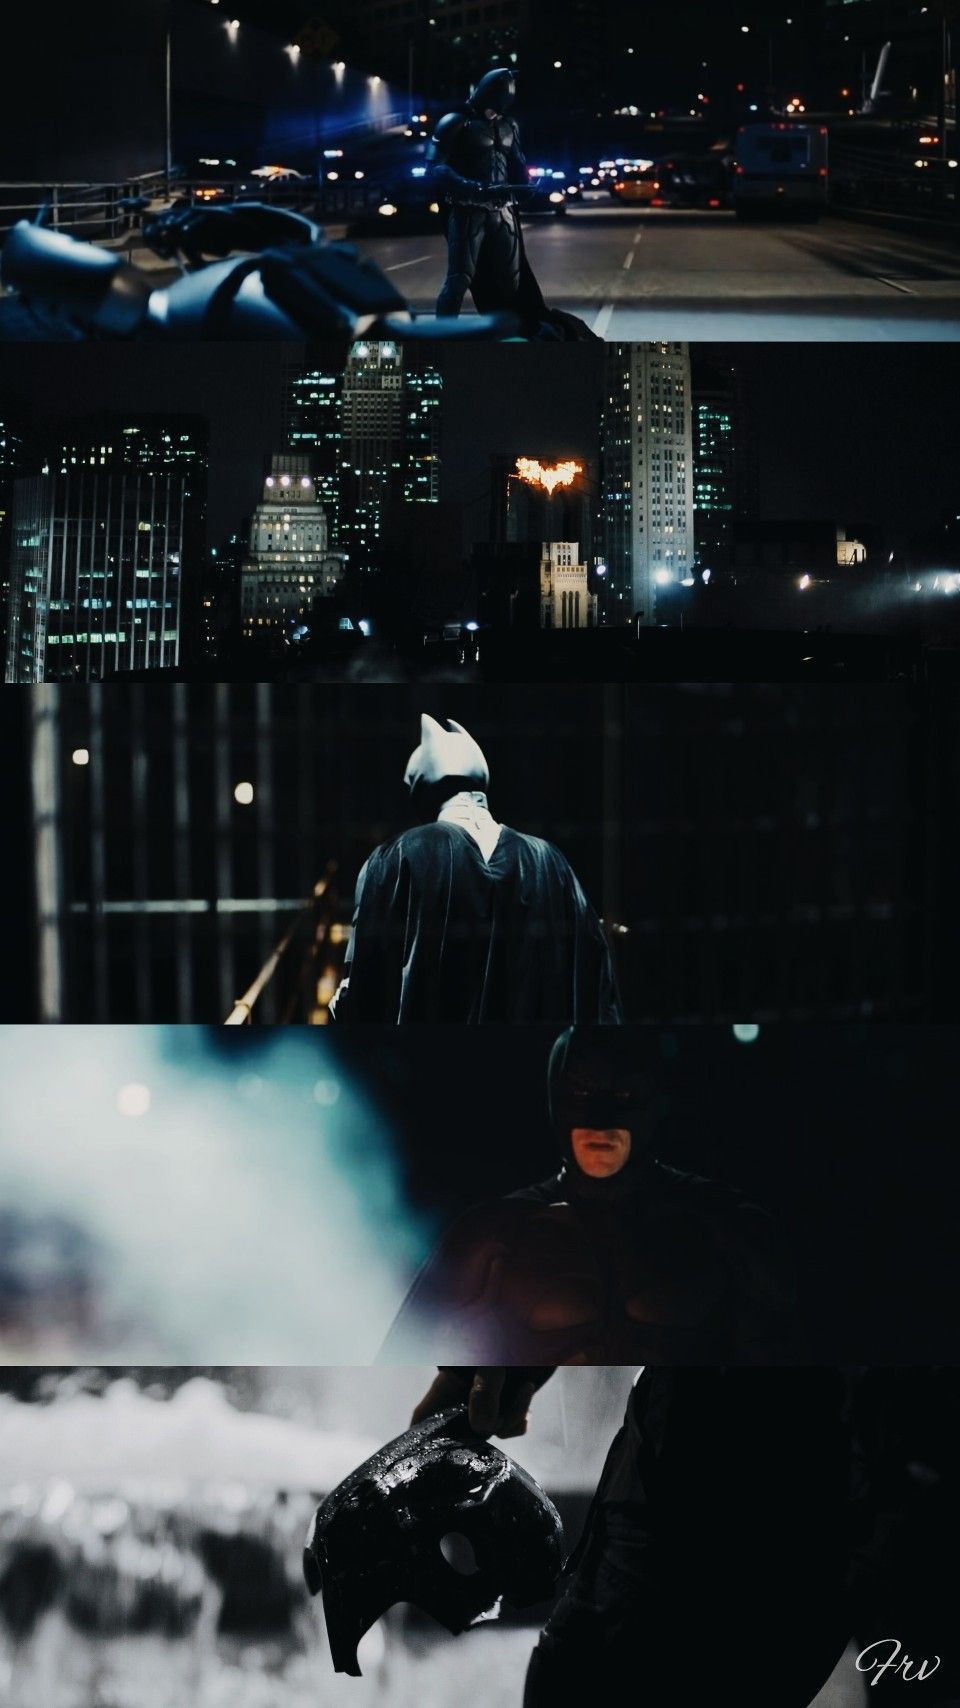 The Dark Knight Hintergrundbild 960x1708. The dark knight rises cinematography wallpaper aesthetic. Batman the dark knight, The dark knight rises, Batman picture